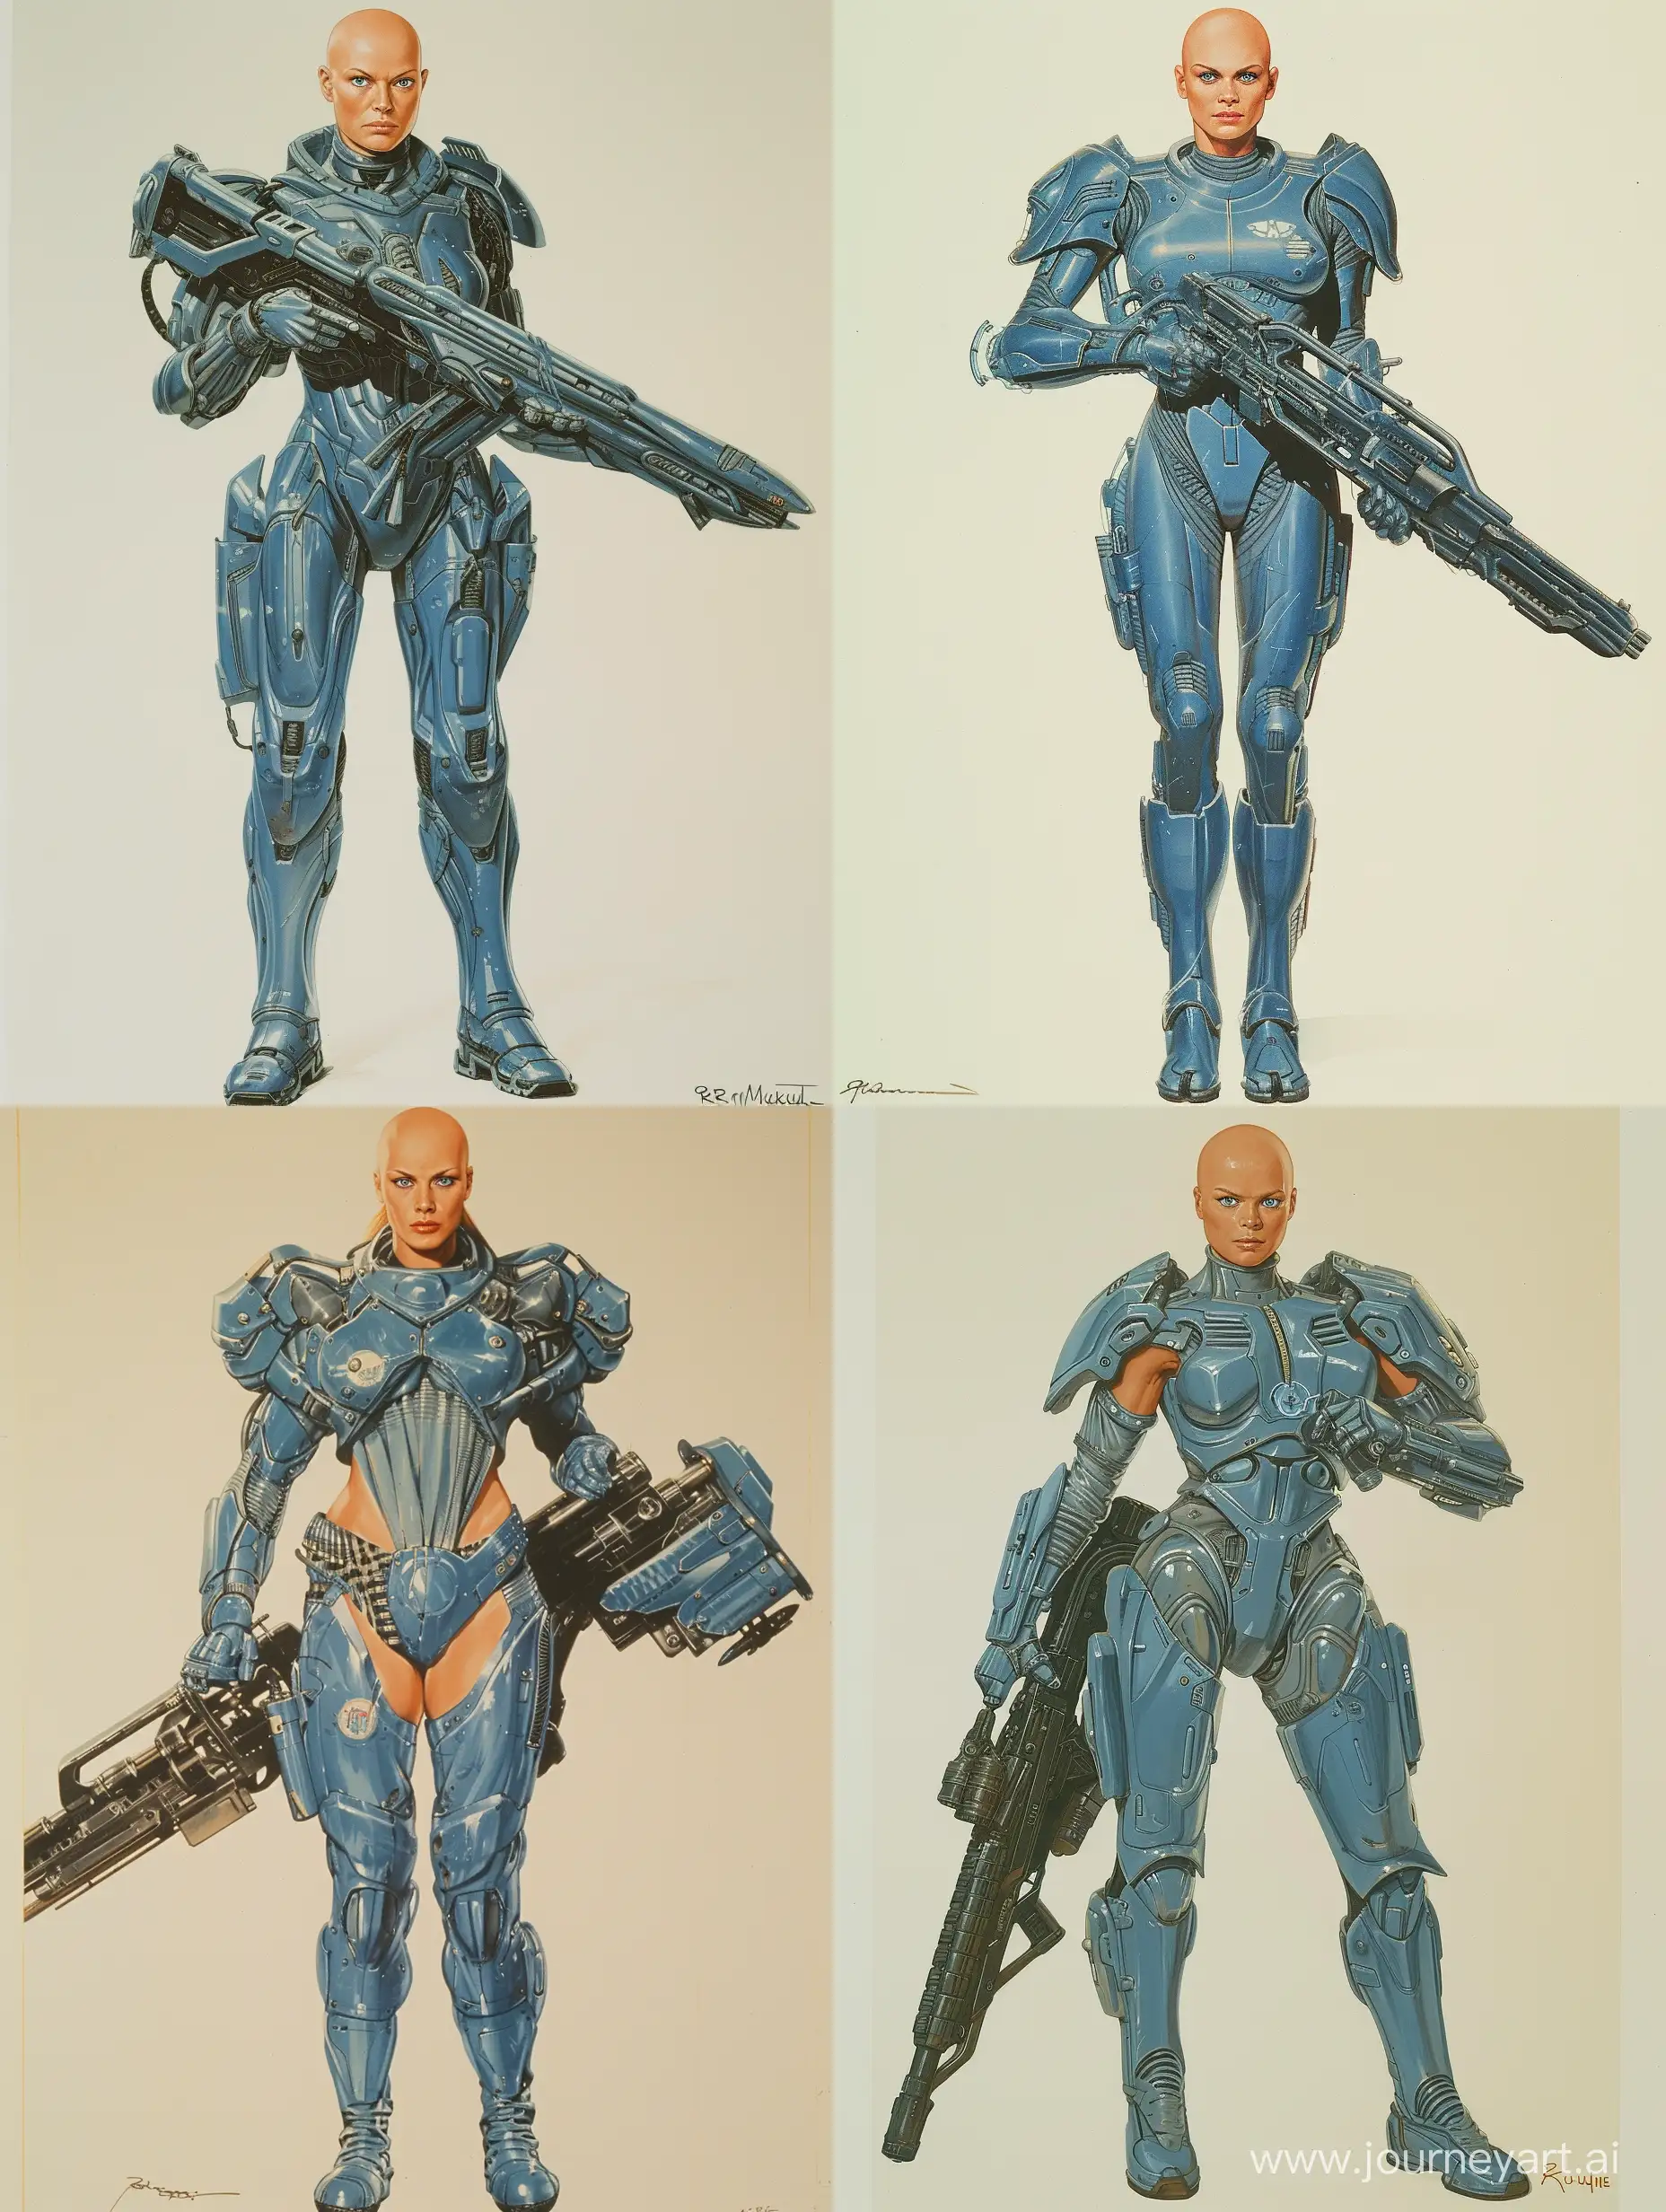 Futuristic-BluePlated-Armor-Woman-with-Metal-Rifle-in-Retro-SciFi-Art